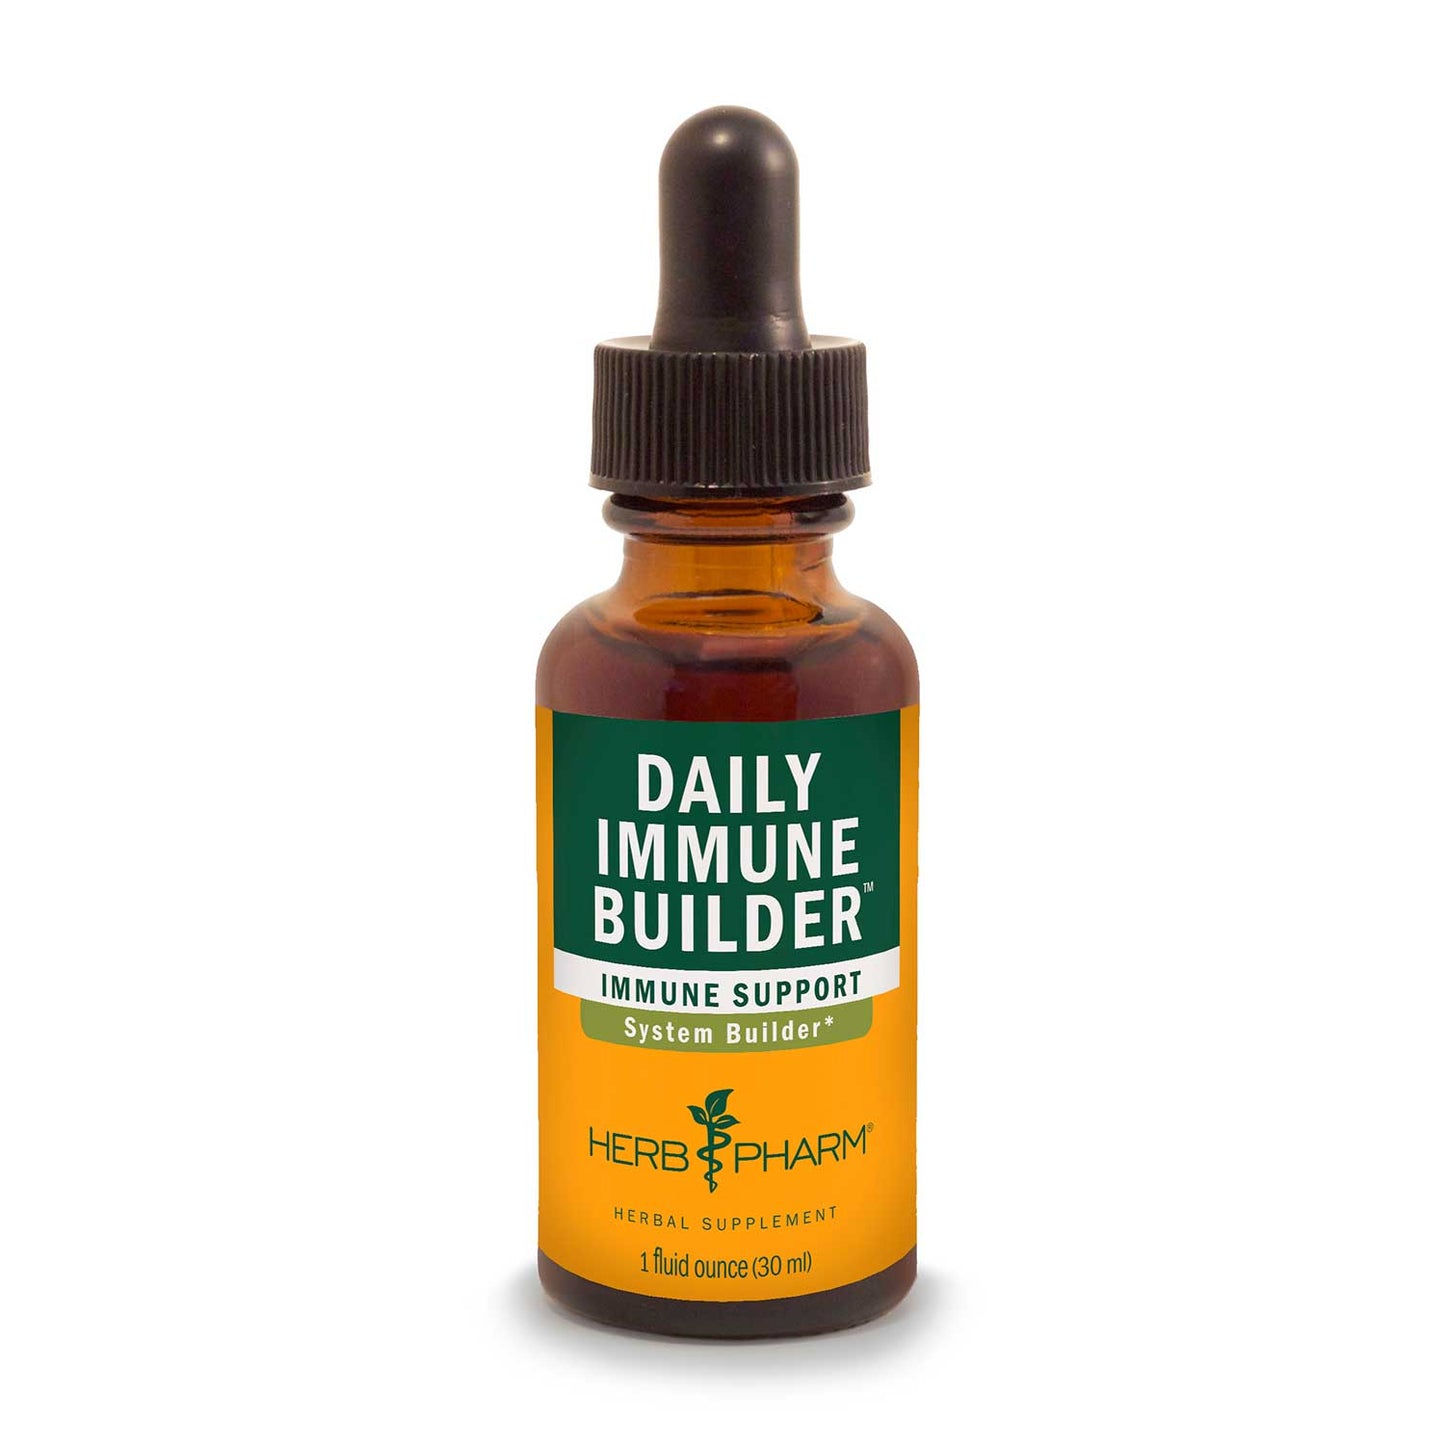 Daily Immune Builder™